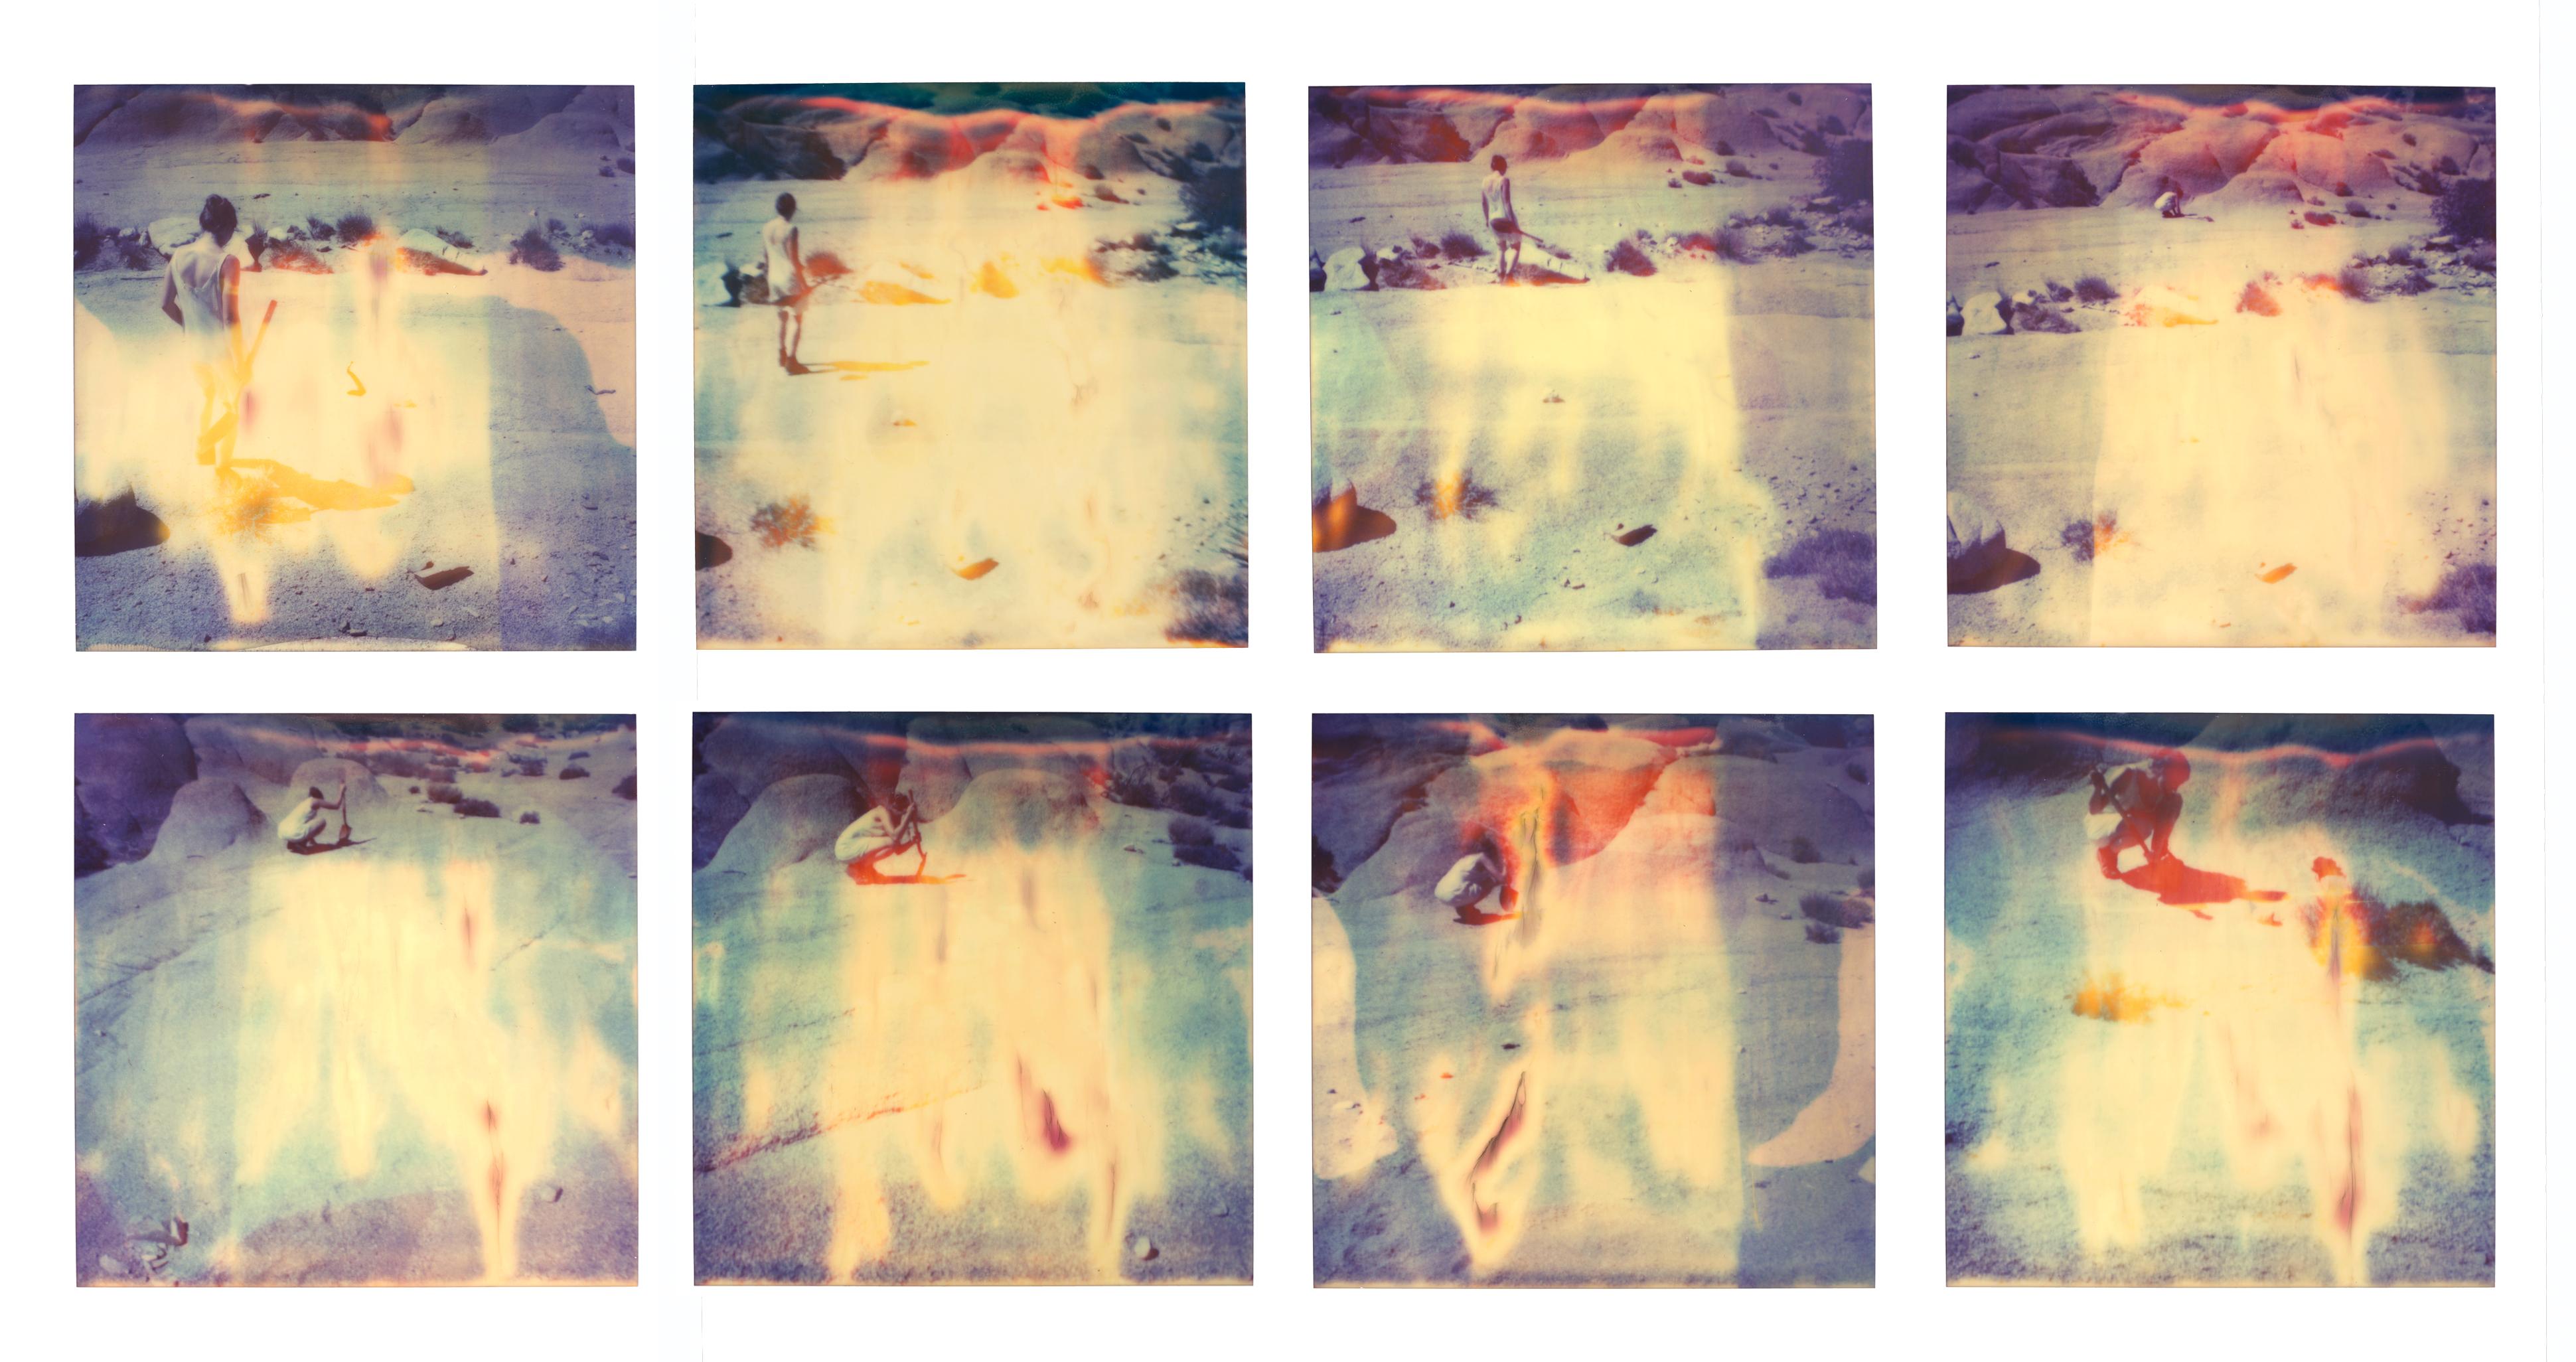 Stefanie Schneider Landscape Photograph - Buried - 8 pieces - Contemporary, Figurative, expired, Polaroid, analog